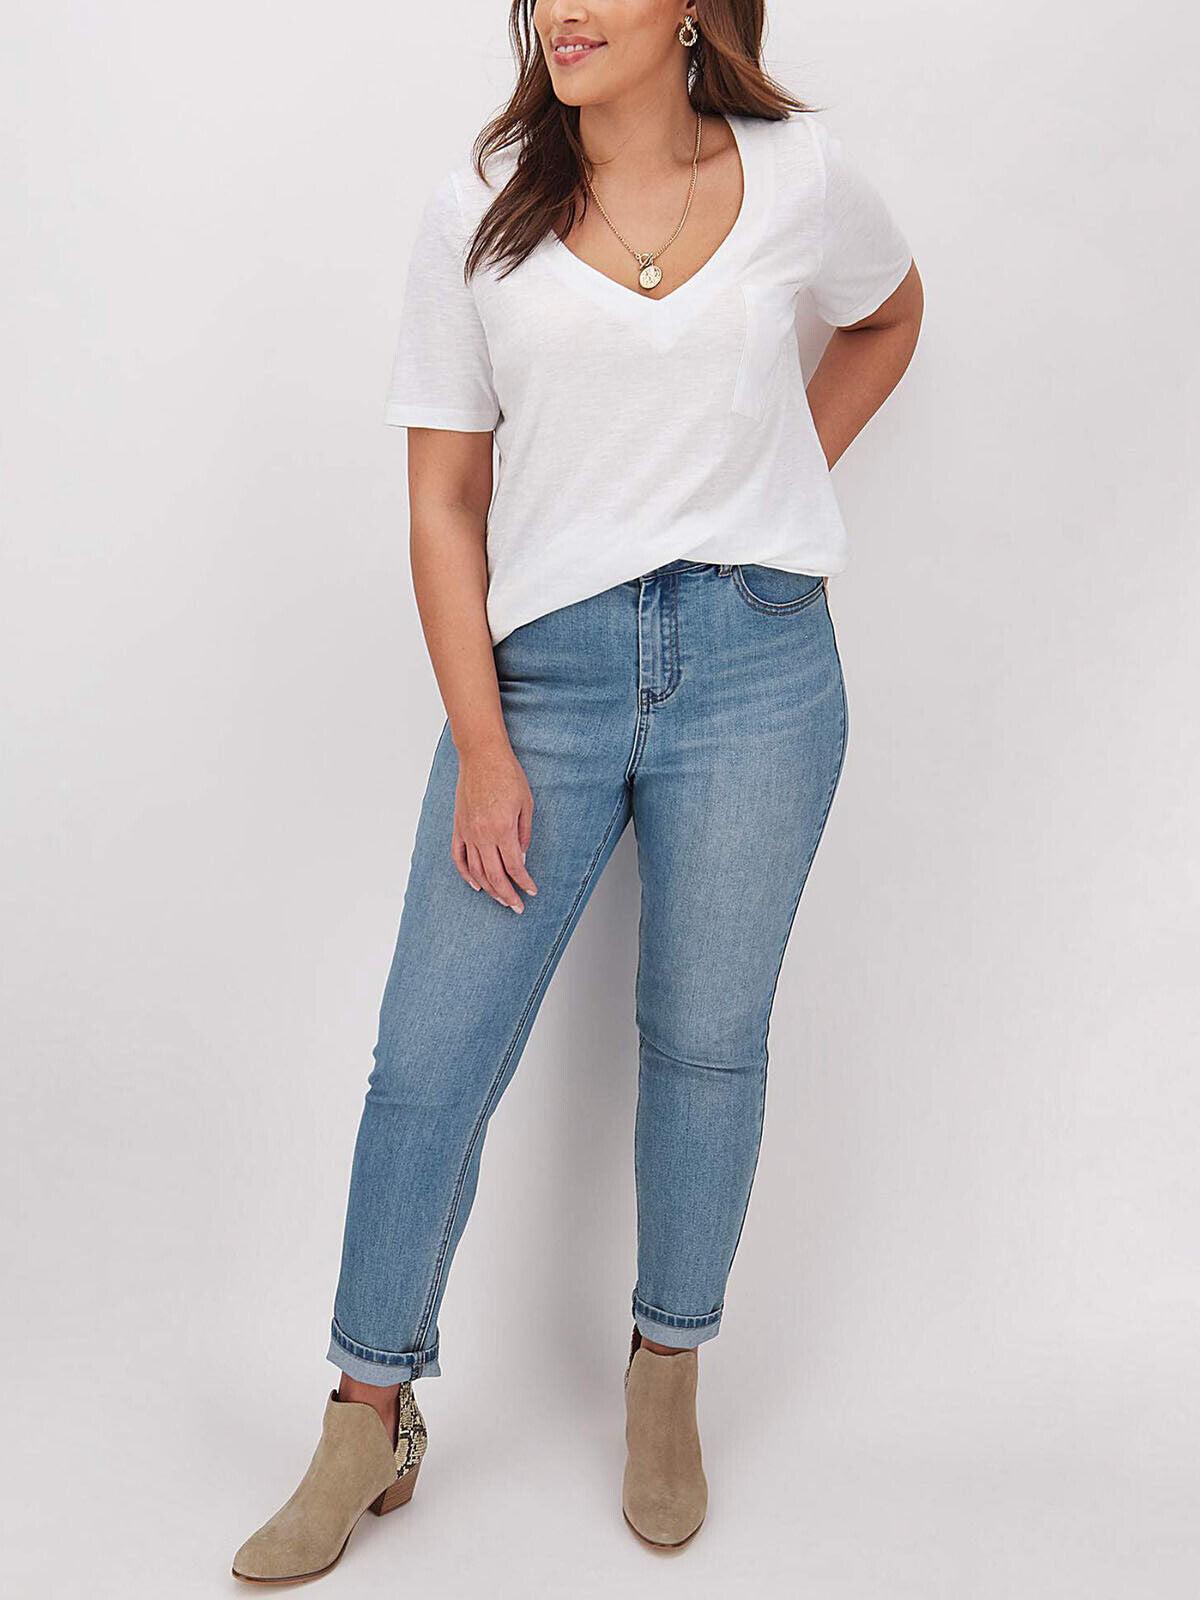 Simply Be White Short Sleeve Slub Jersey Pocket T-Shirt Sizes 16, 18, 24, 26, 30